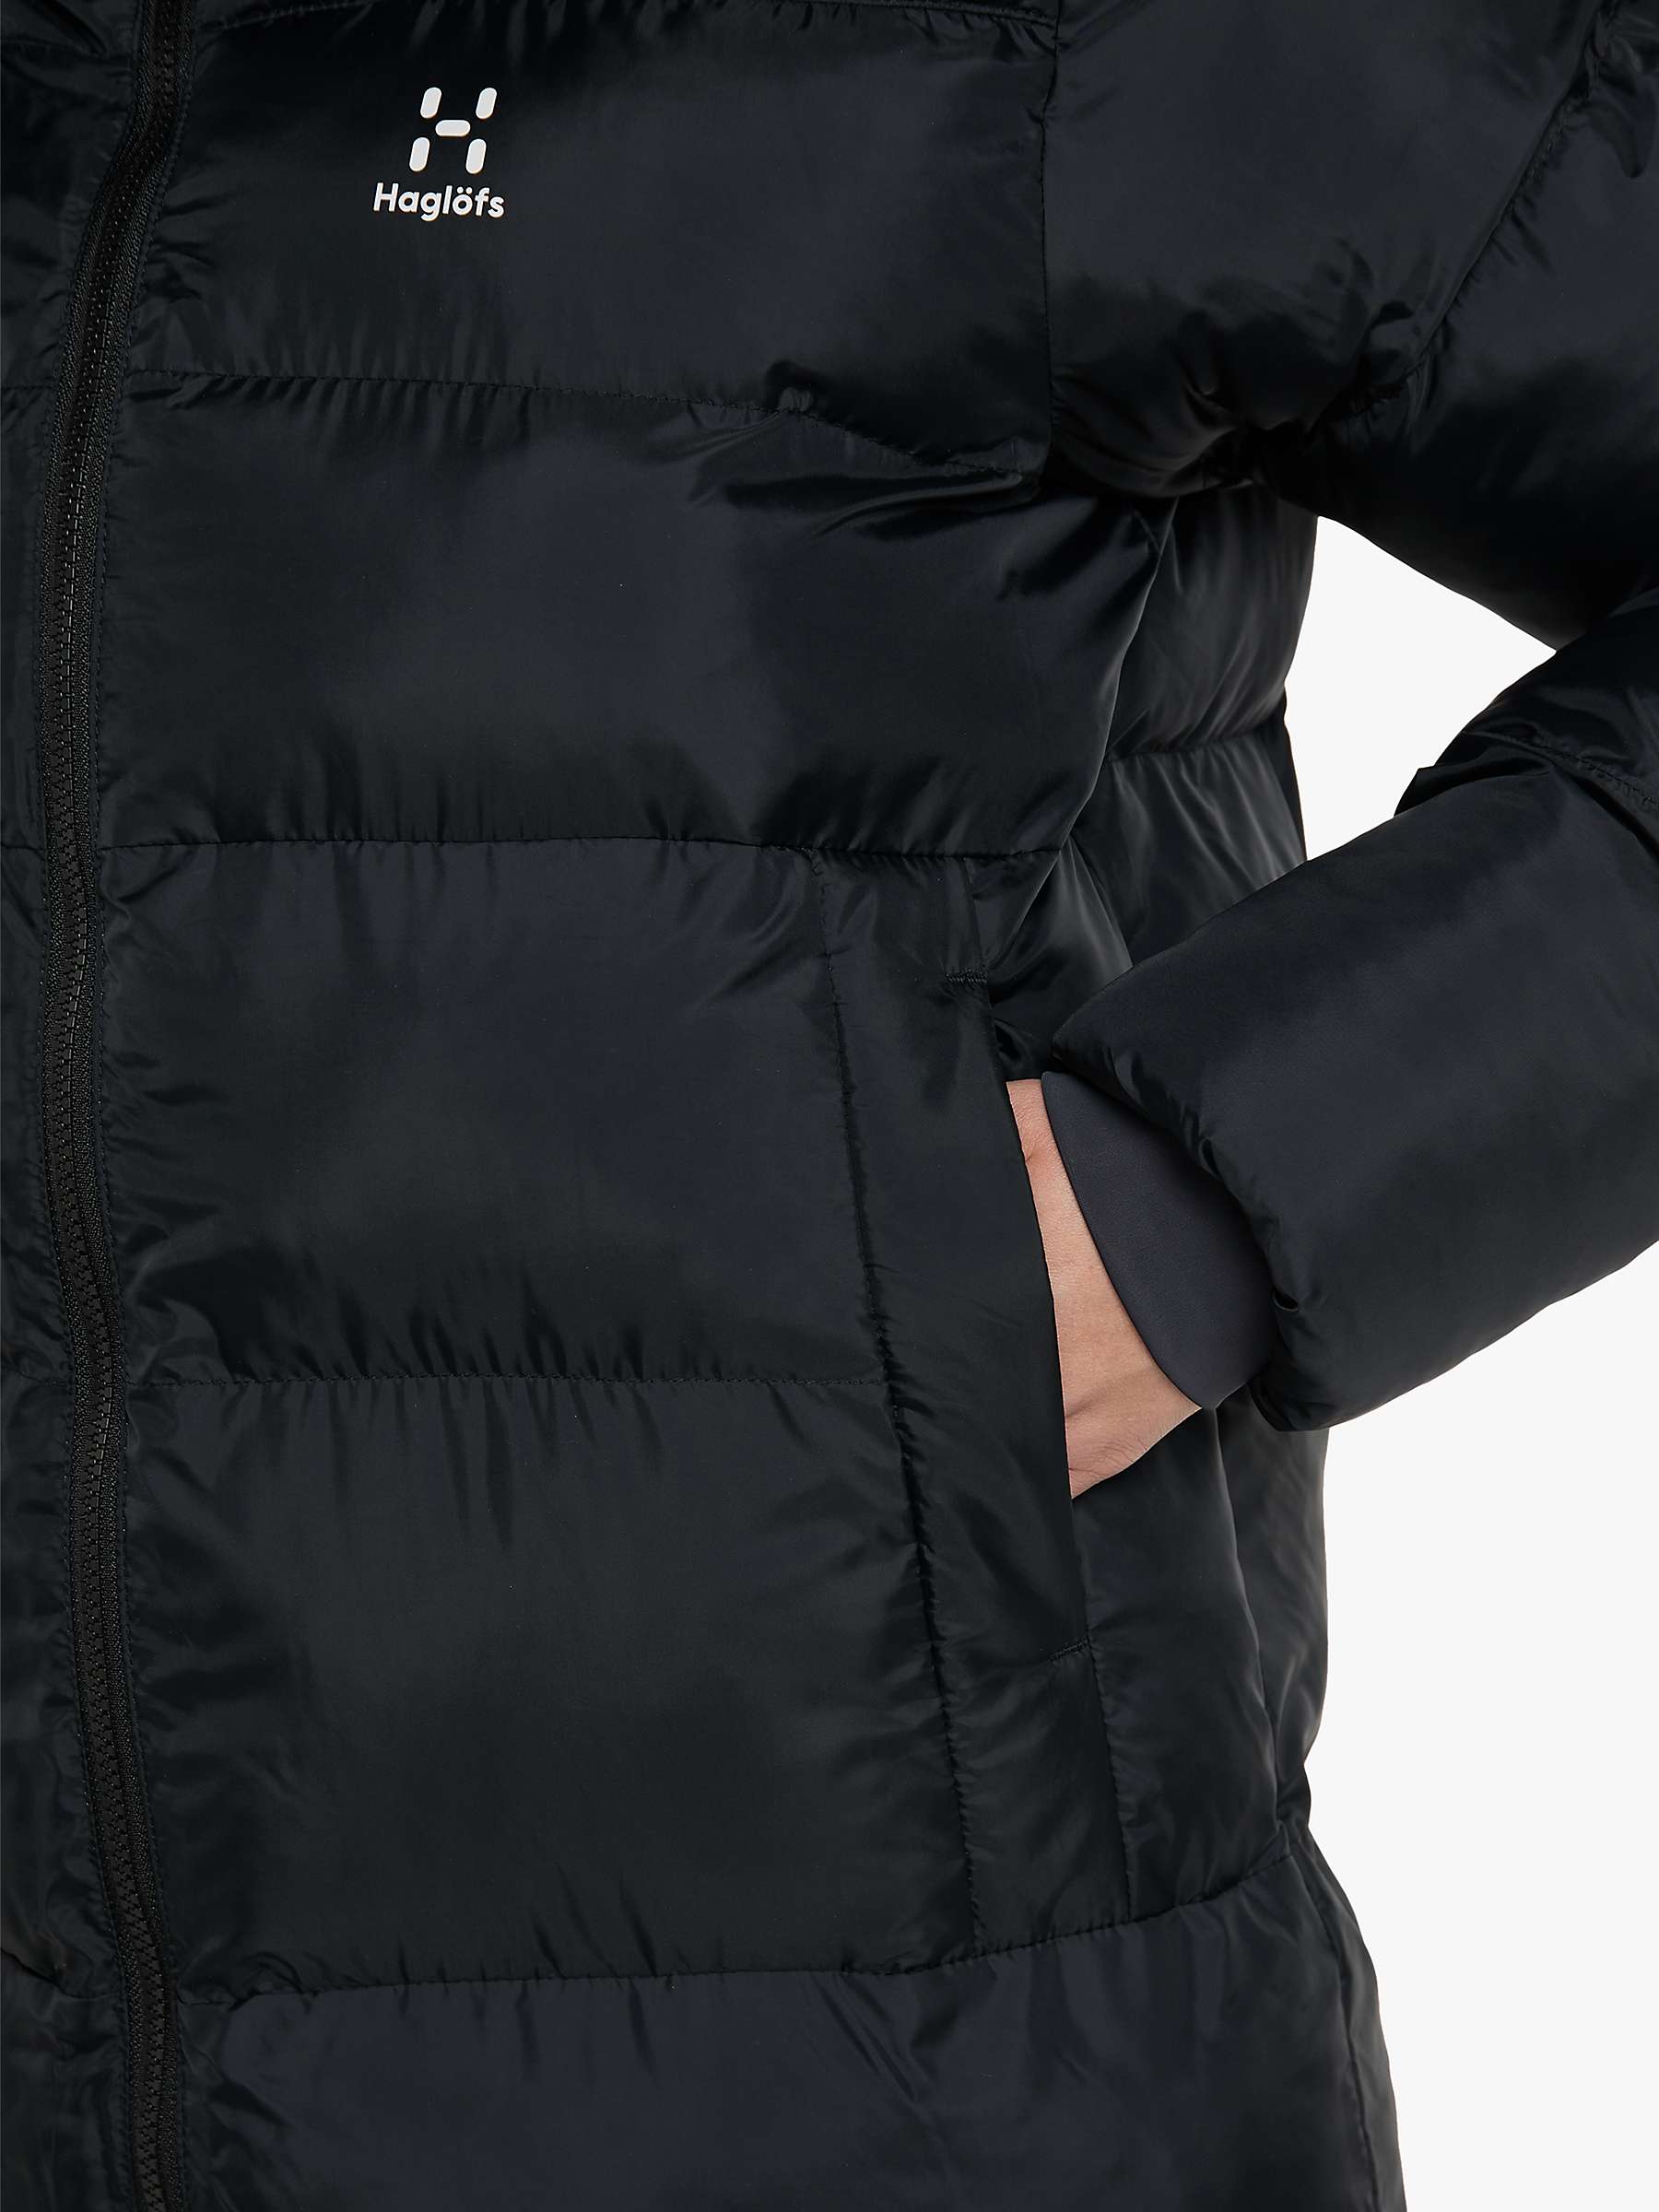 Buy Haglöfs Long Mimic Women's Parka Jacket Online at johnlewis.com